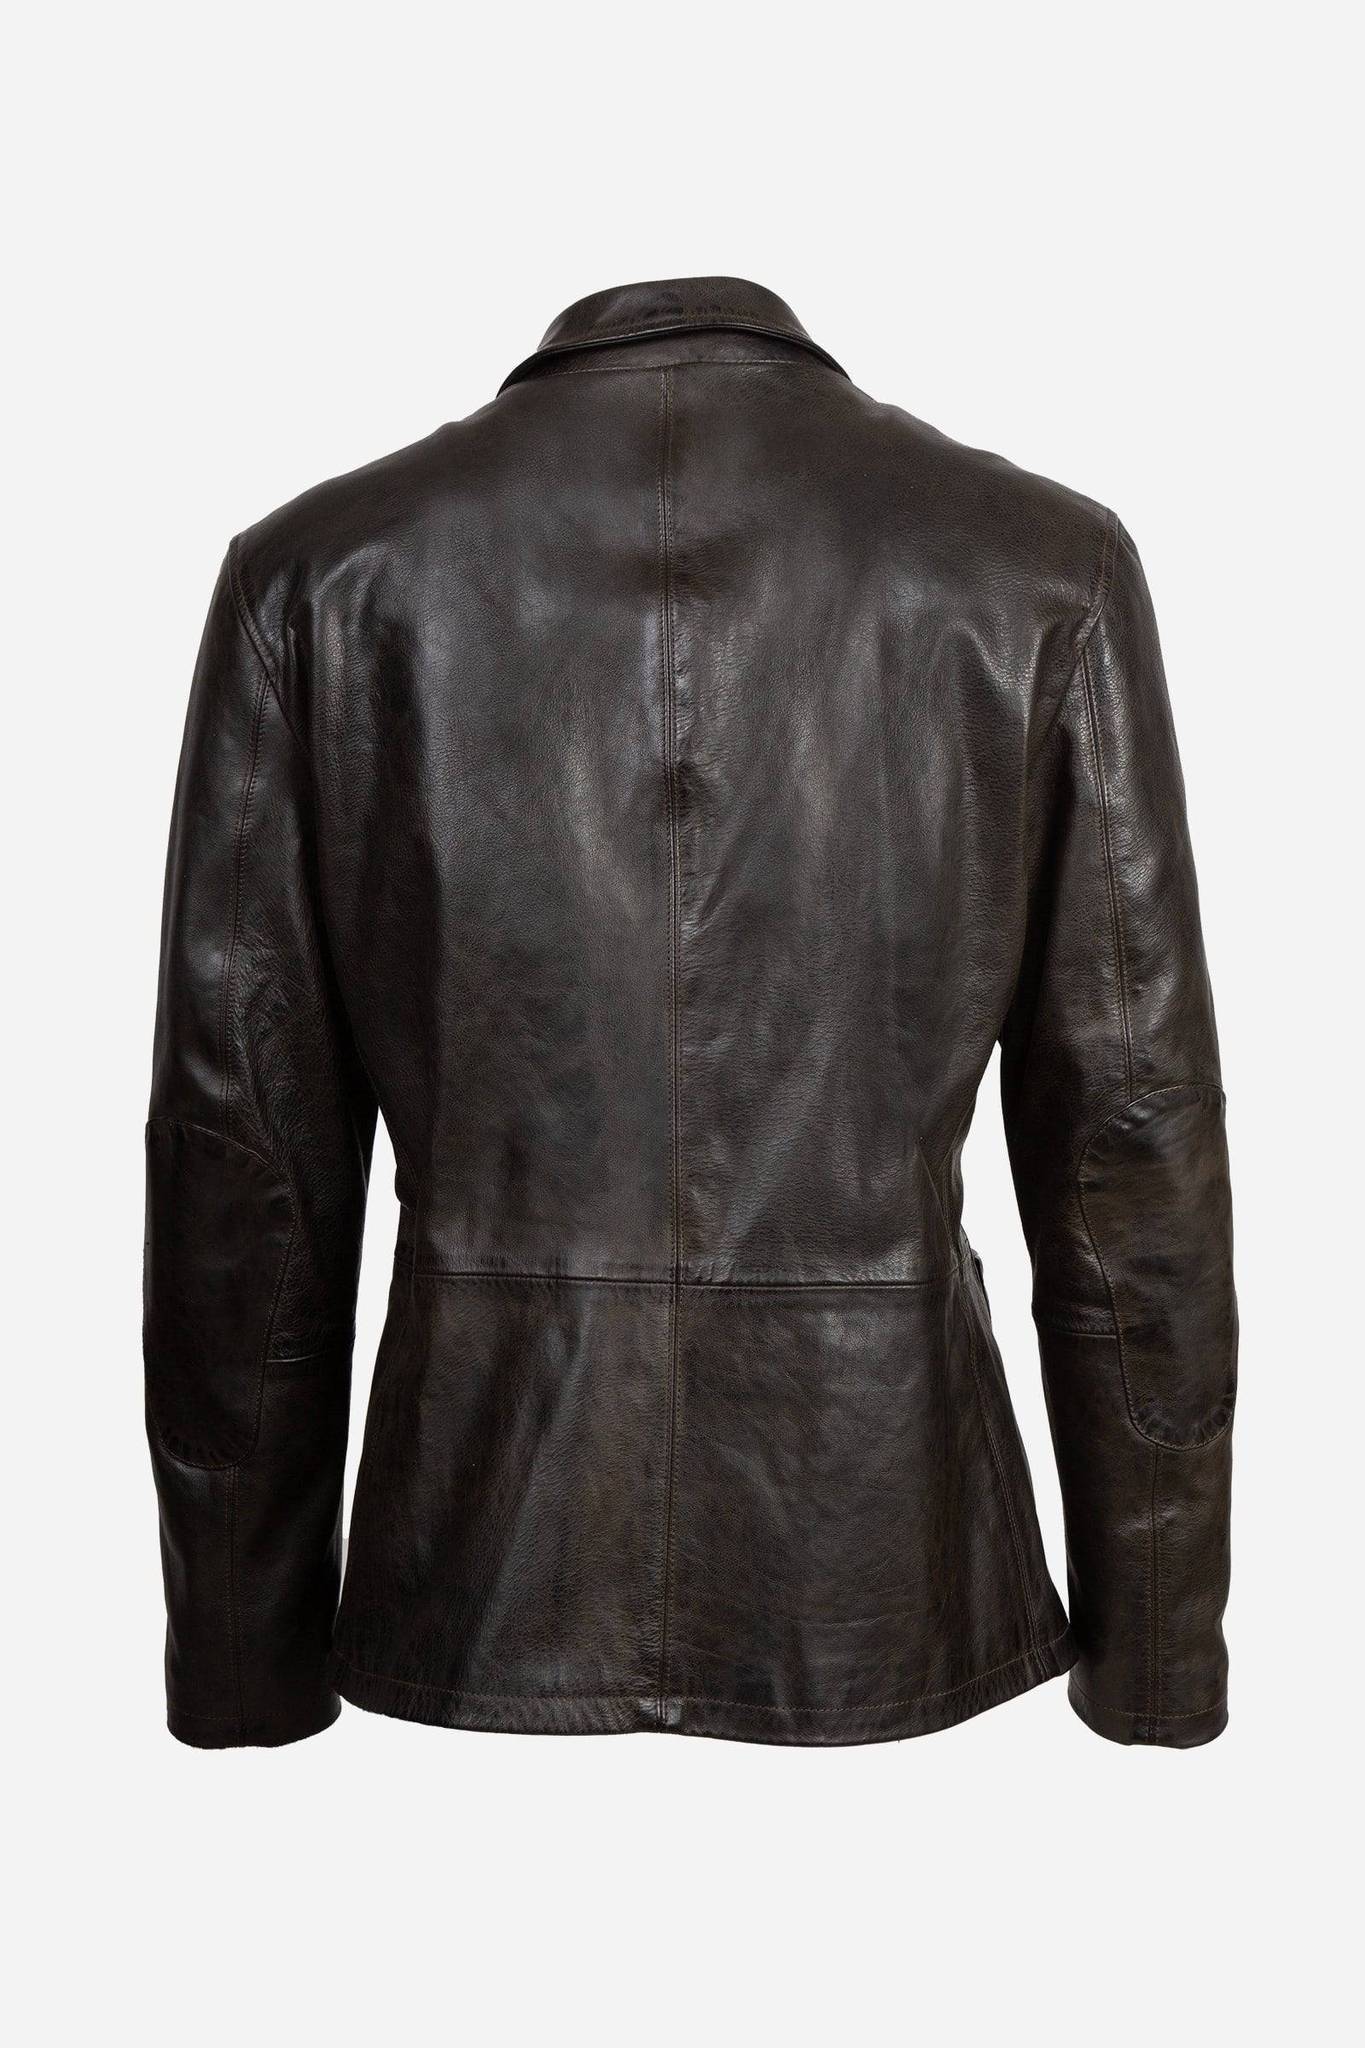 Matchless Ian Blazer Men’s Leather Jacket Antique Black - Back View